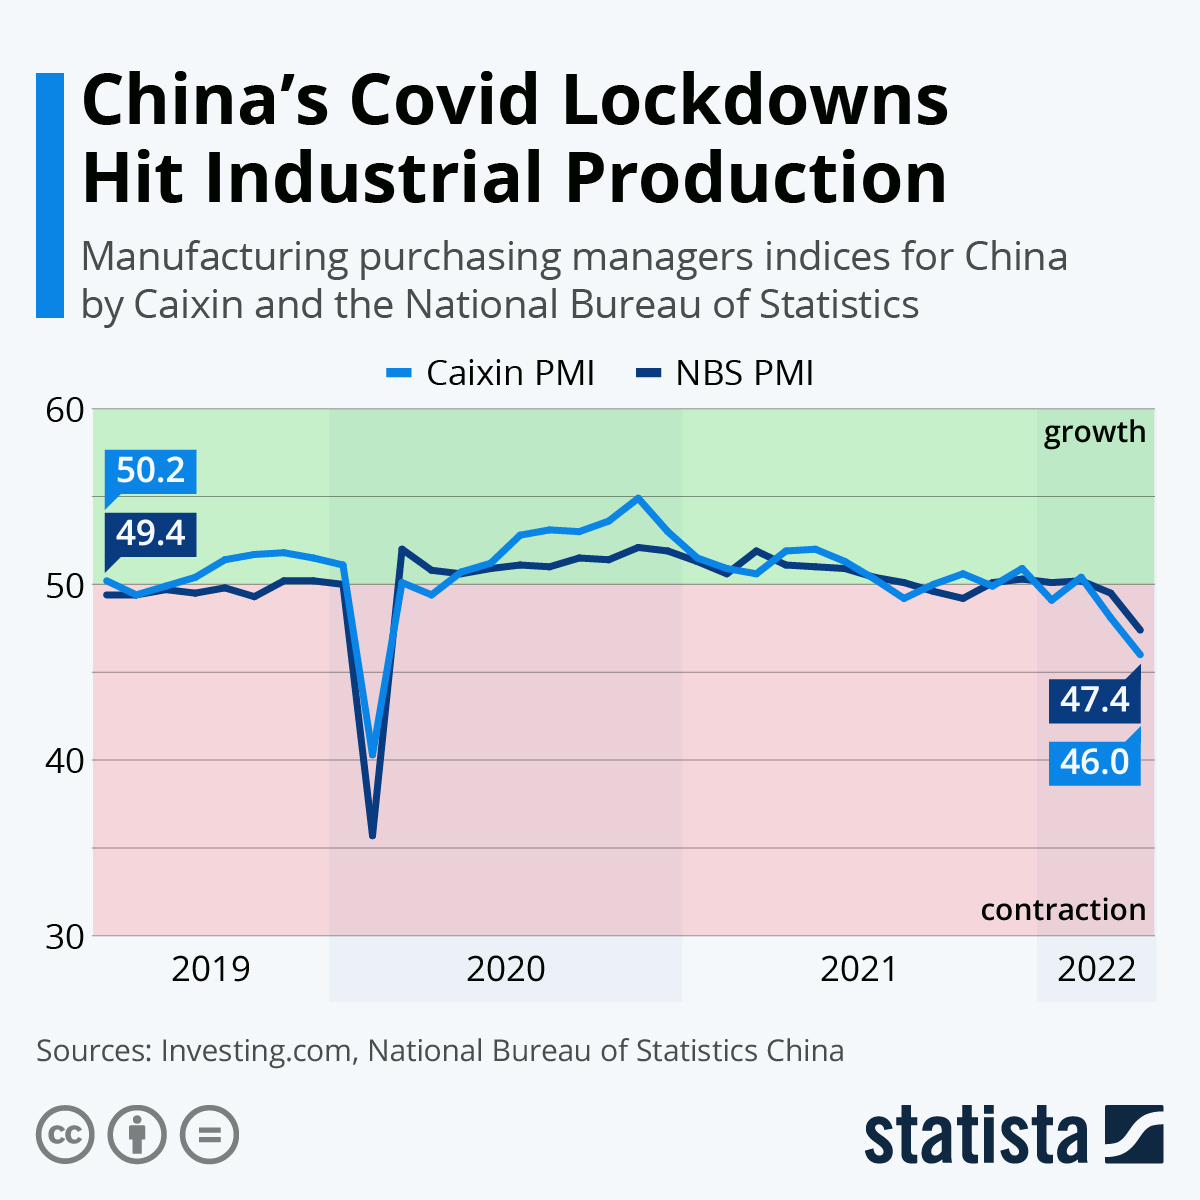 China's Covid Lockdowns Hurt Factory Production